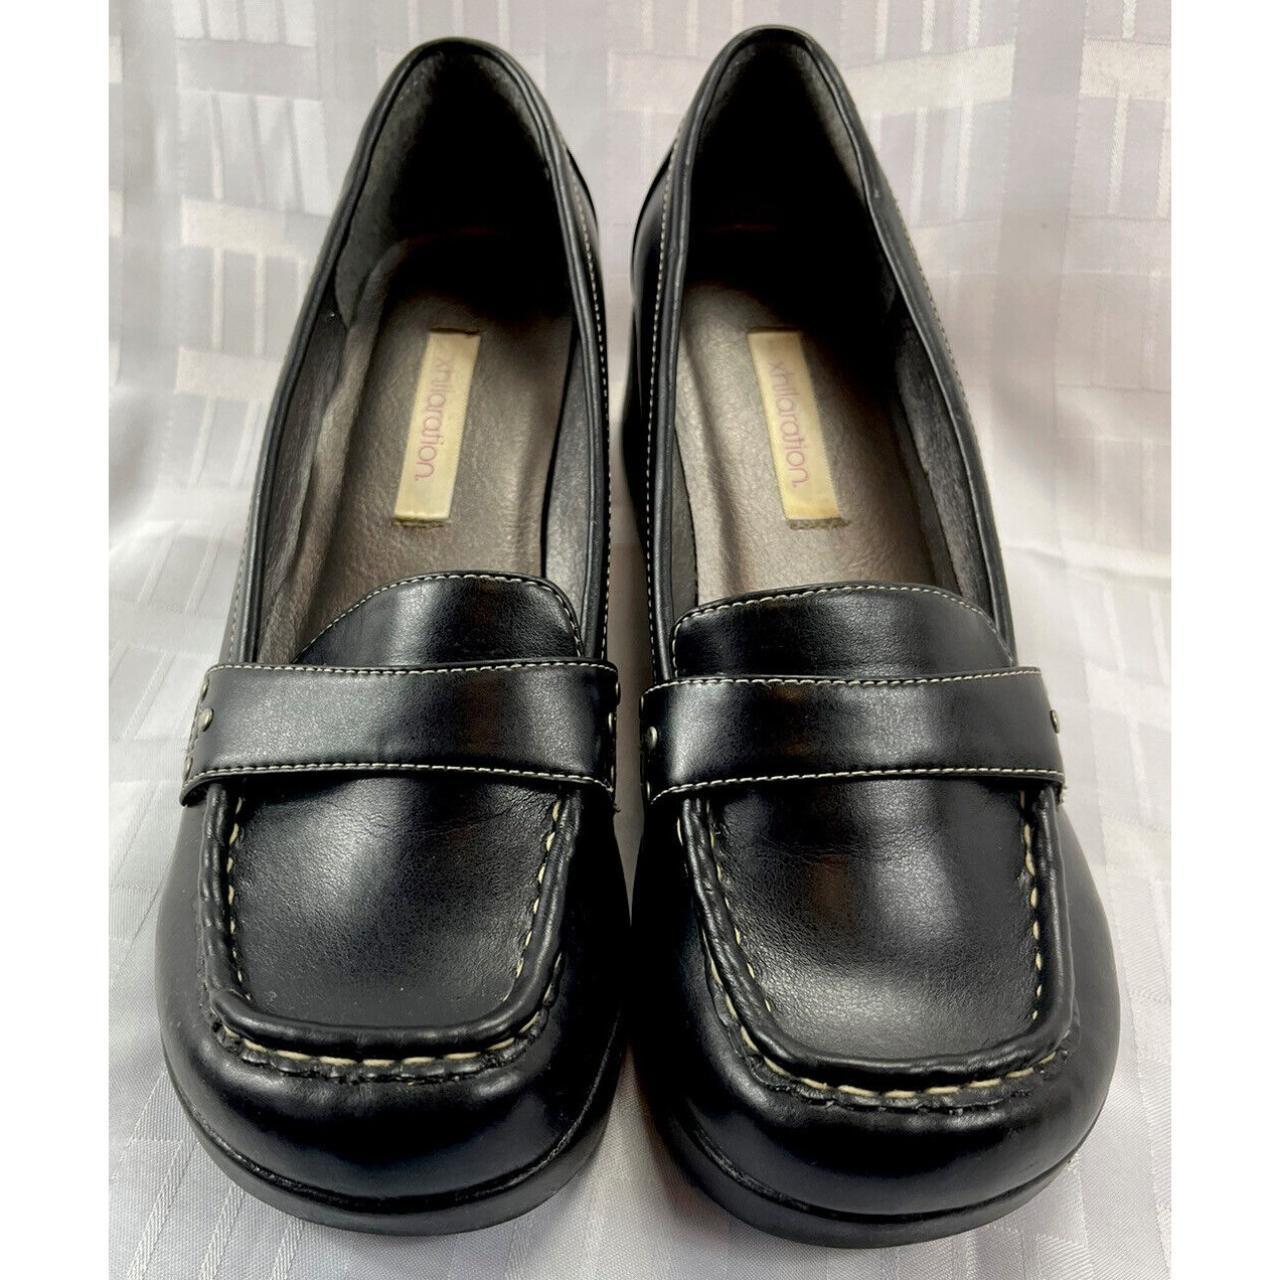 exhilaration flat shoes heel Size 7.5 Black Comfort... - Depop